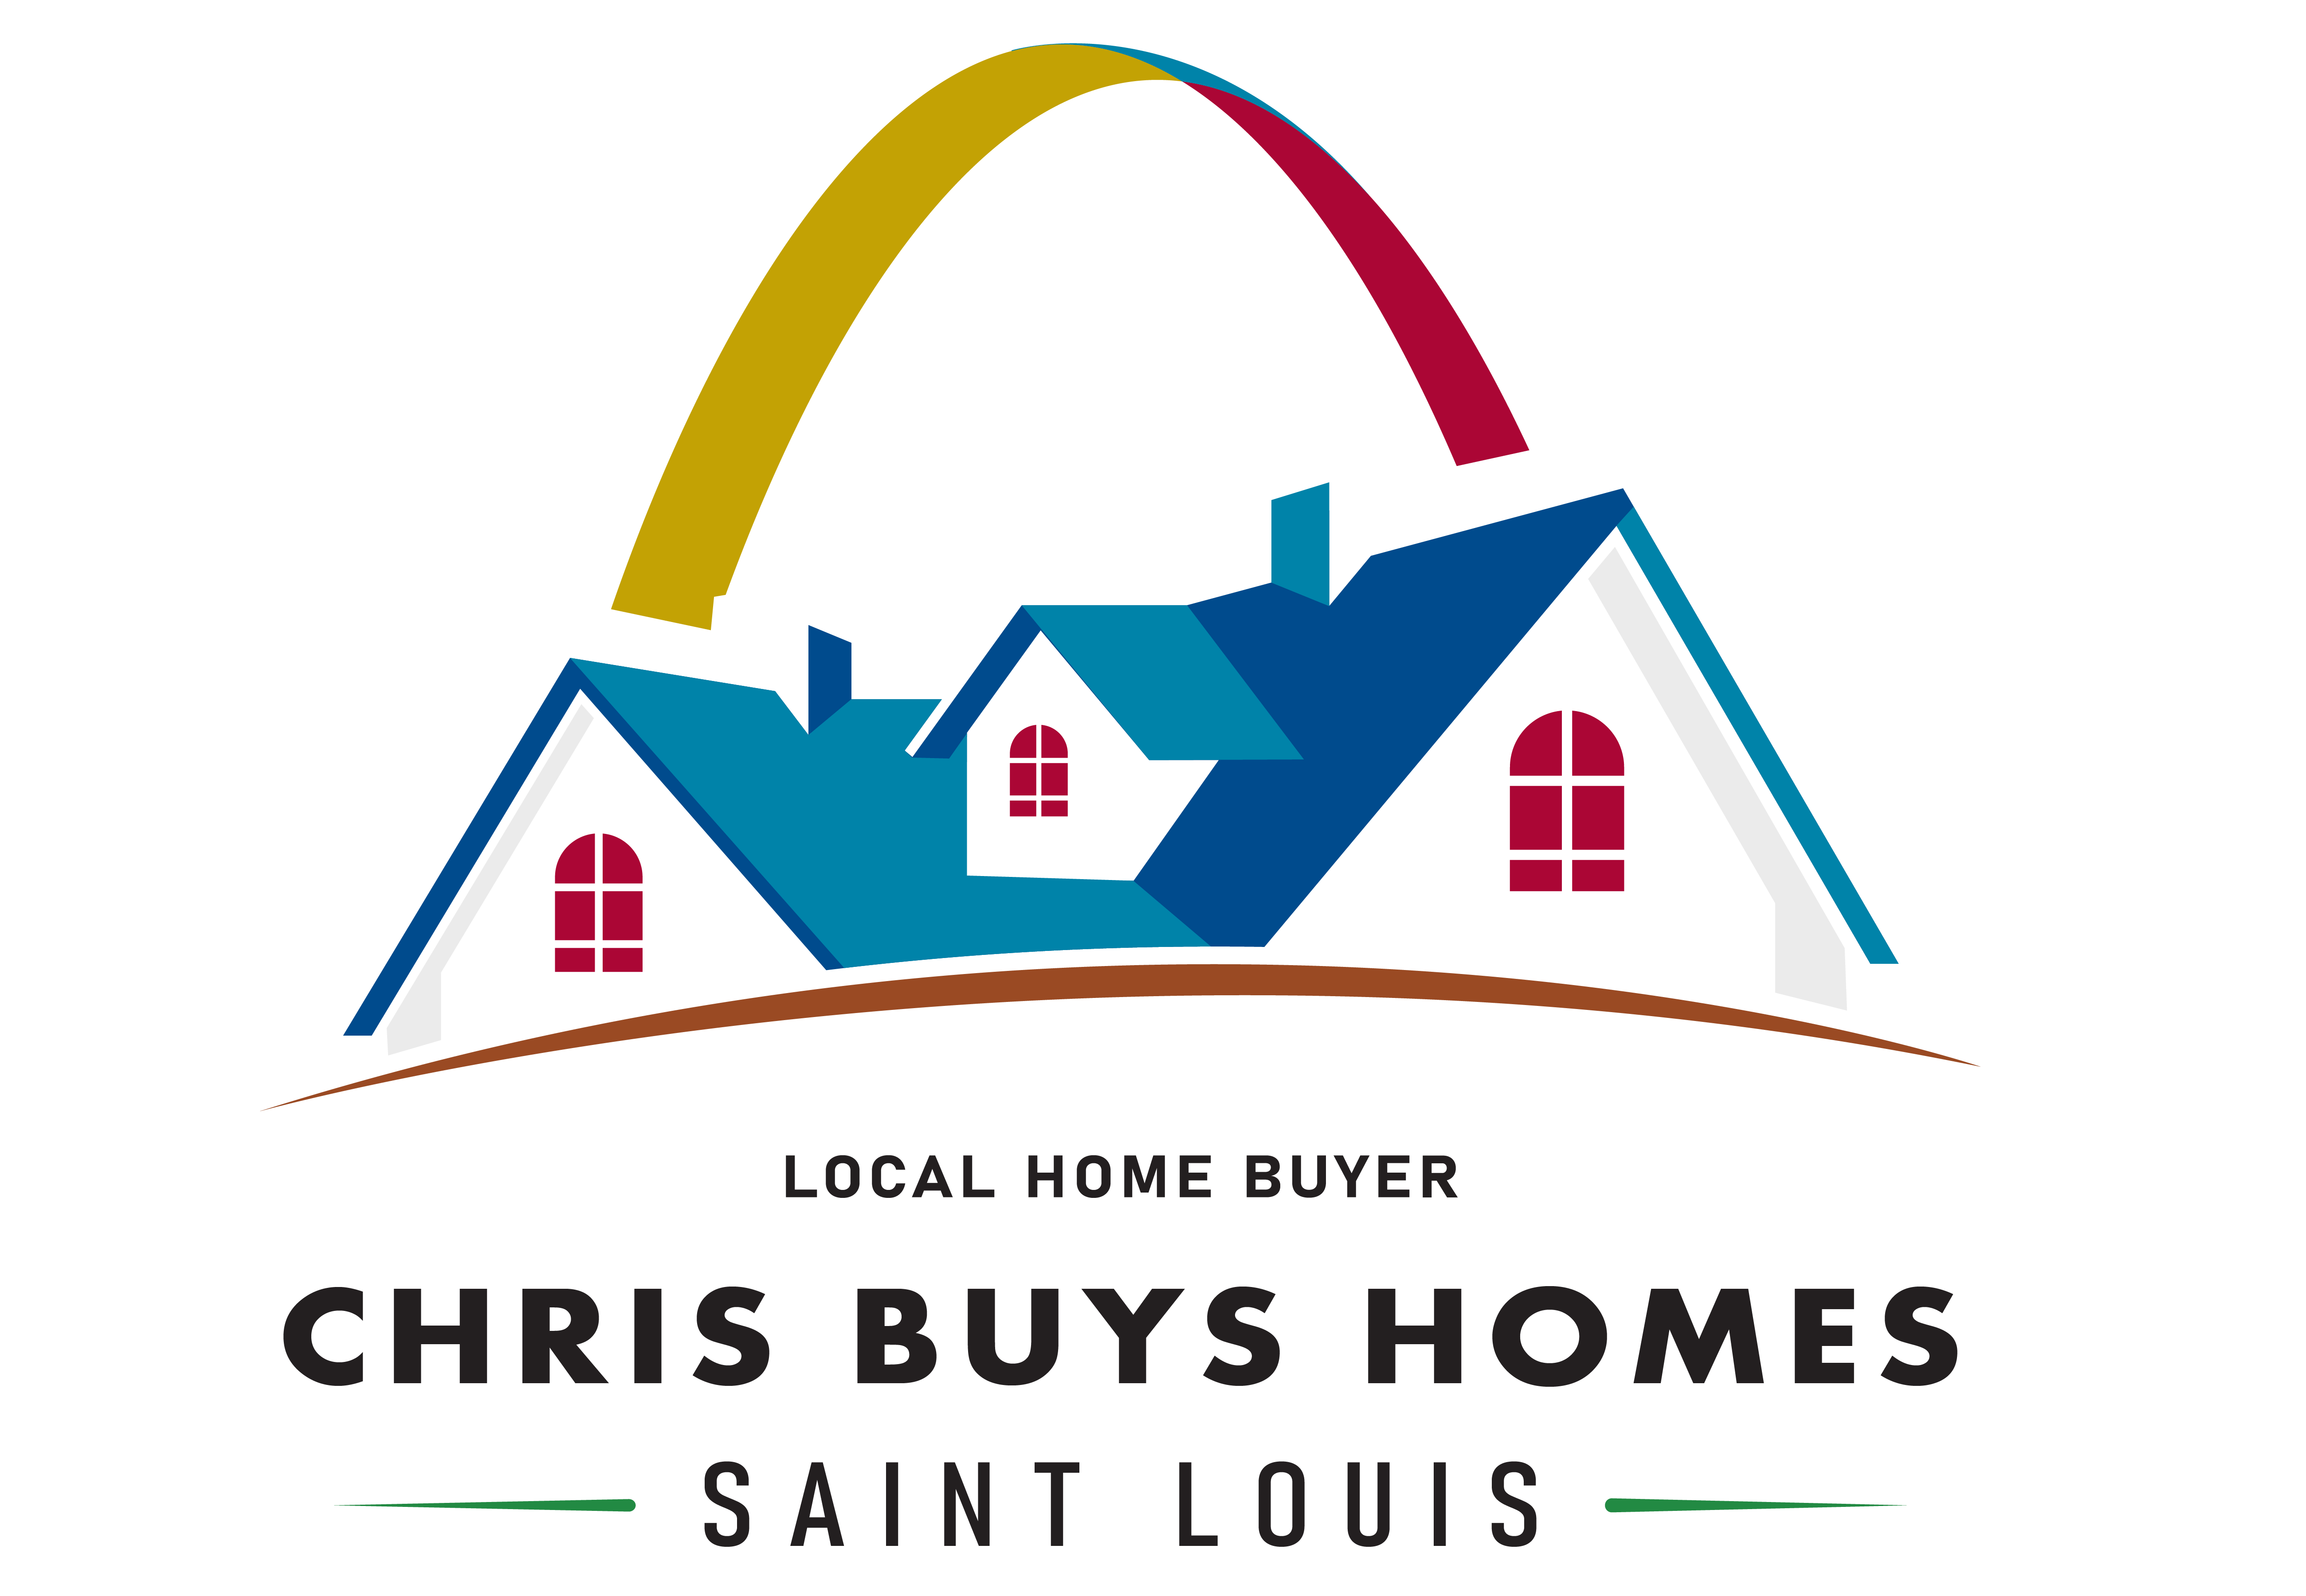 Chris Buys Homes in St. Louis logo